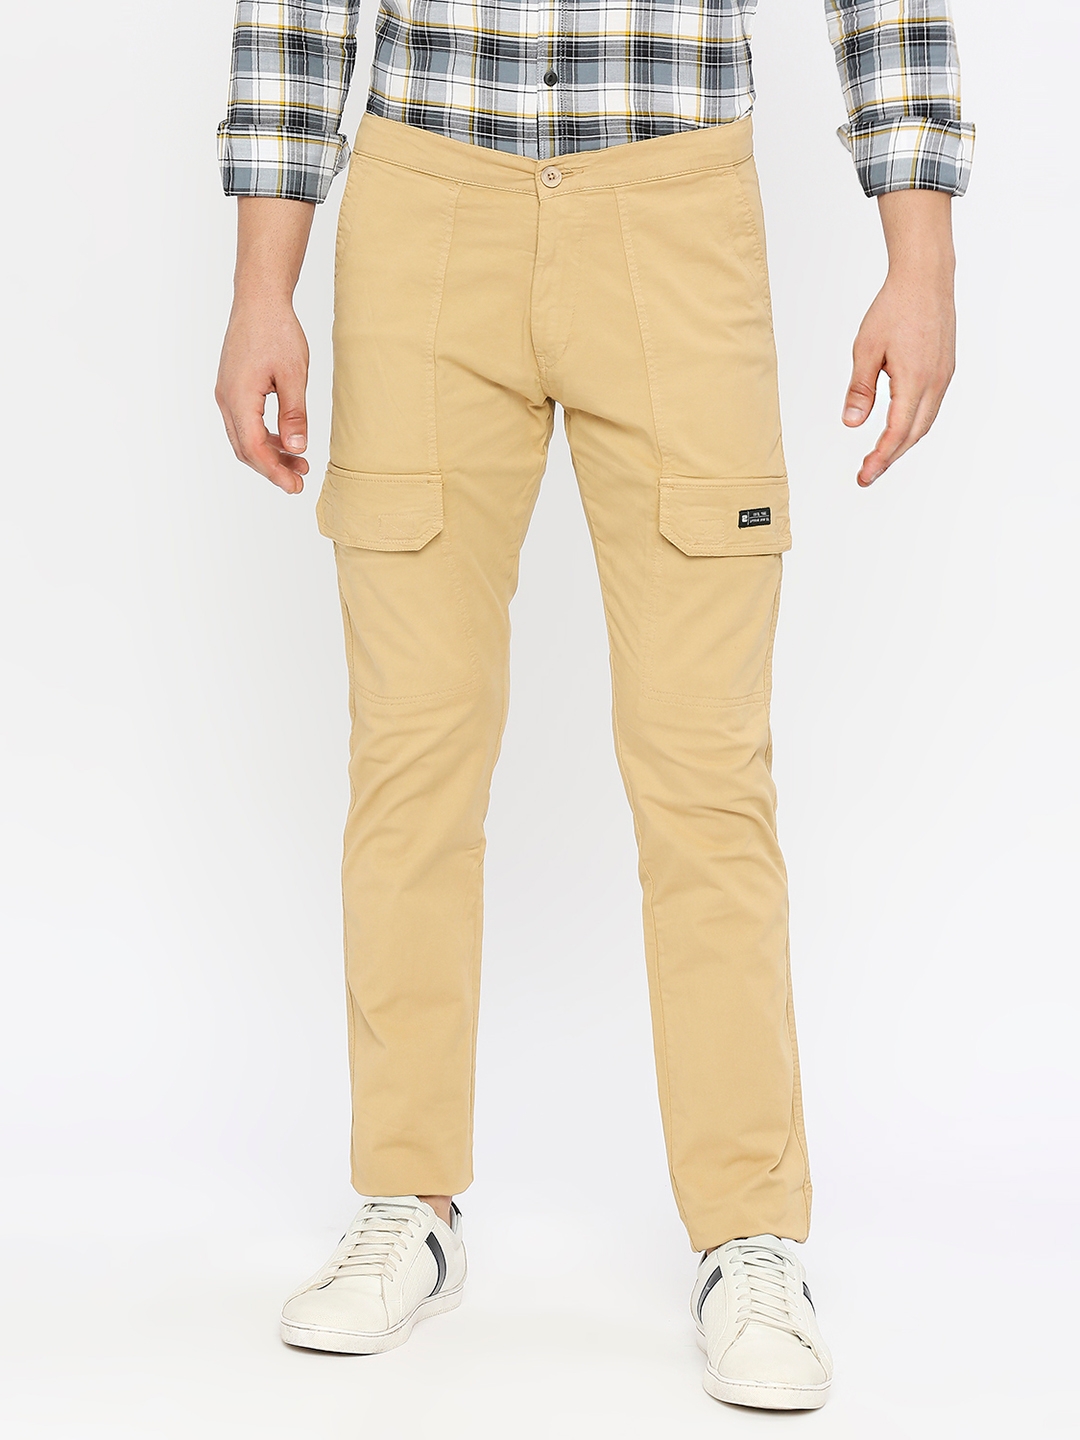 spykar | Spykar Men Light Khaki Cotton Slim Fit Ankle Length Plain Trousers 0